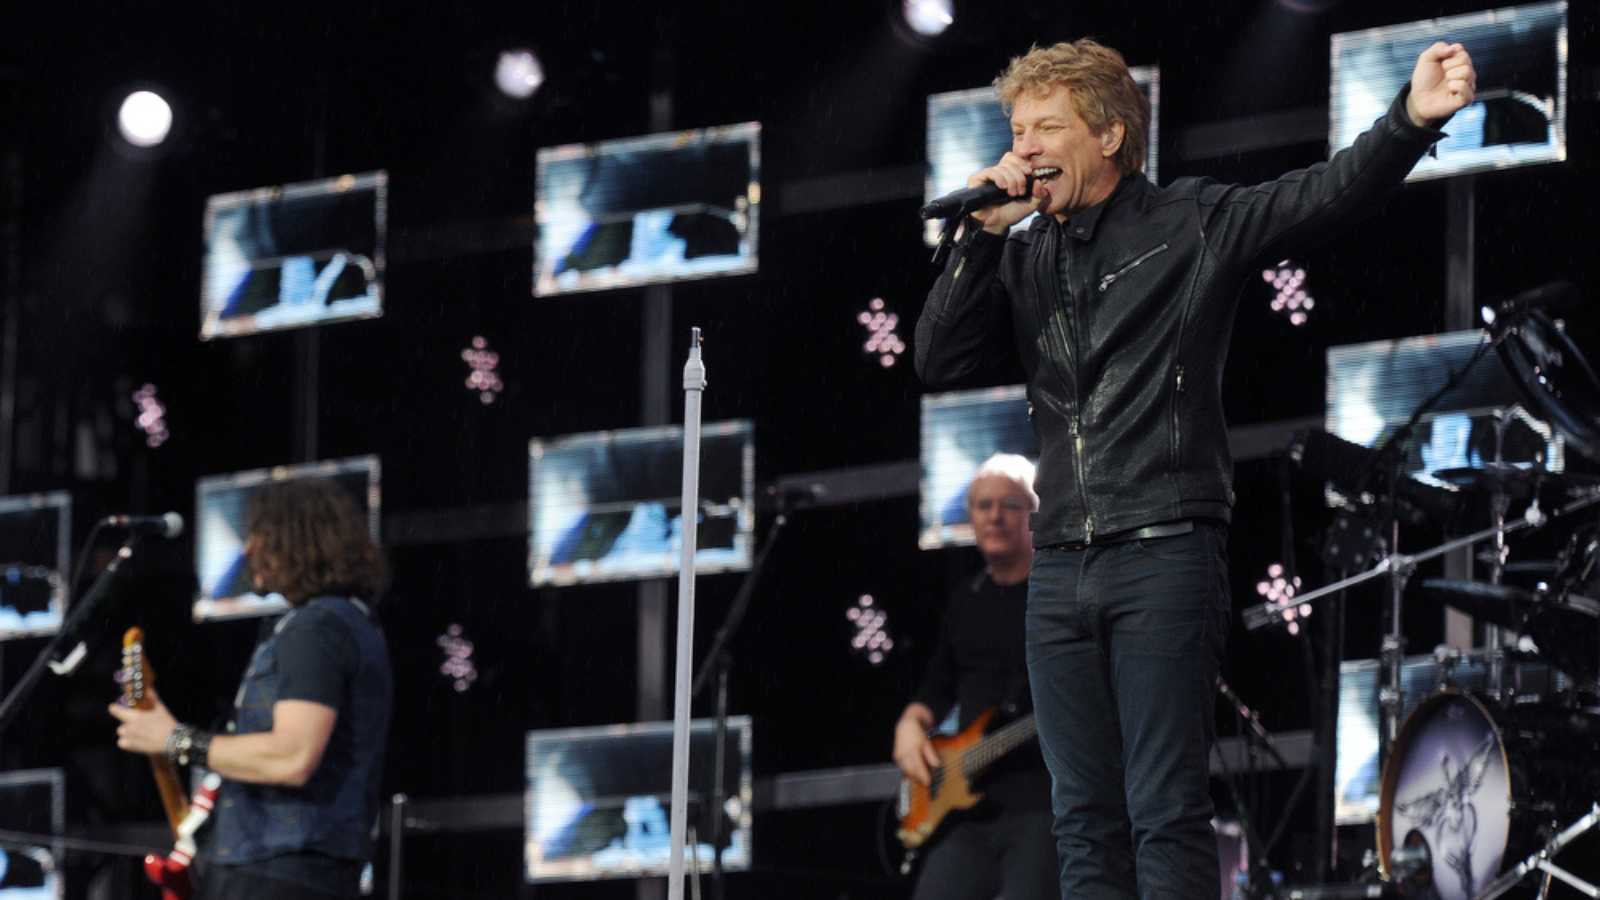 PRAGUE - JUNE 24: Famous American singer Jon Bon Jovi (right) of Bon Jovi rock band during performance in Prague, Czech republic, June 24, 2013